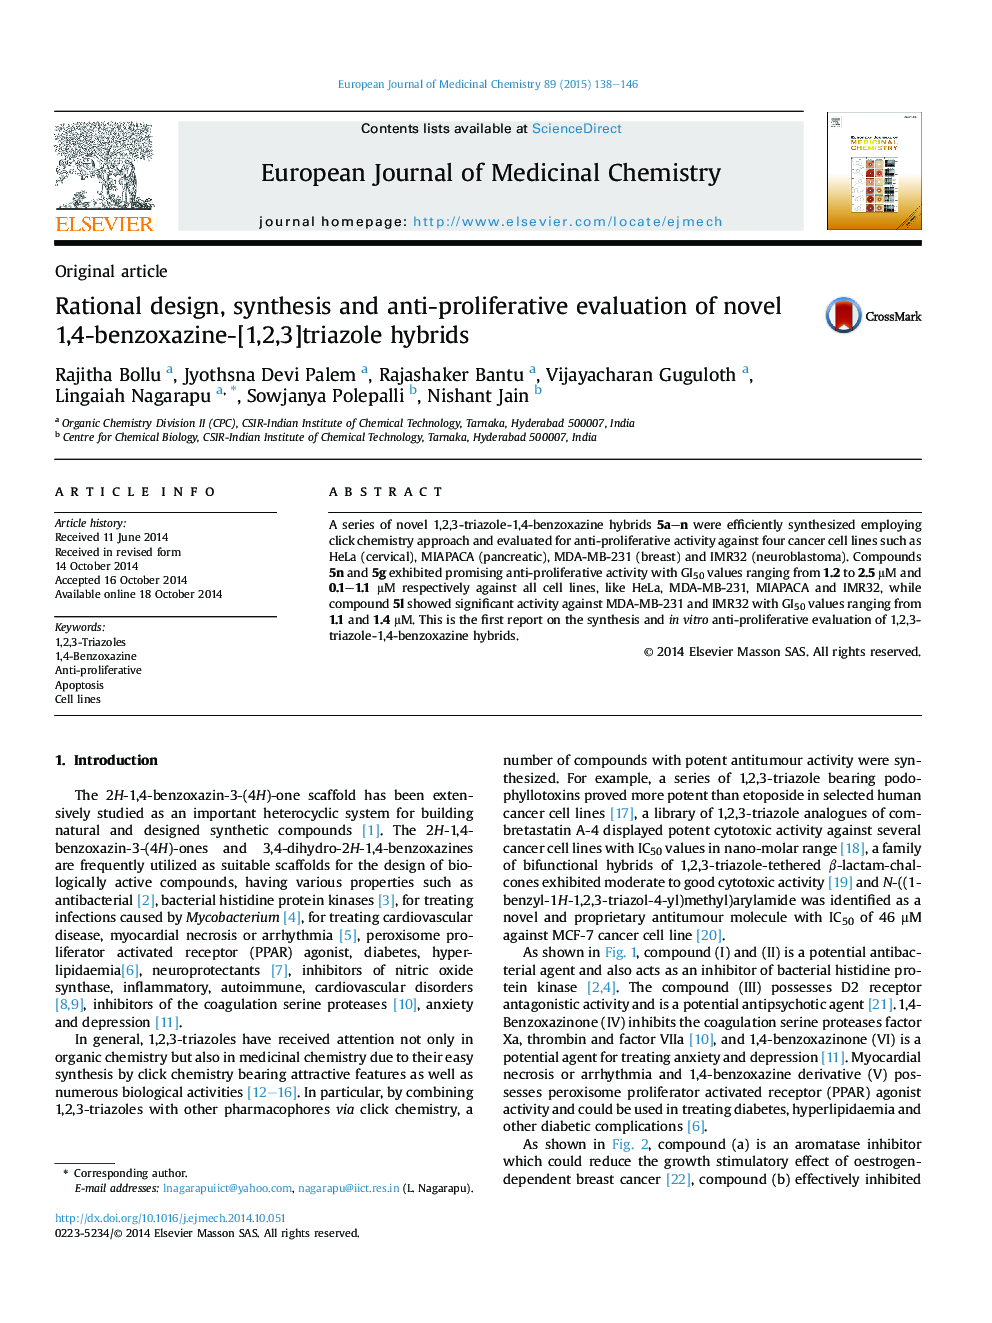 Rational design, synthesis and anti-proliferative evaluation of novel 1,4-benzoxazine-[1,2,3]triazole hybrids